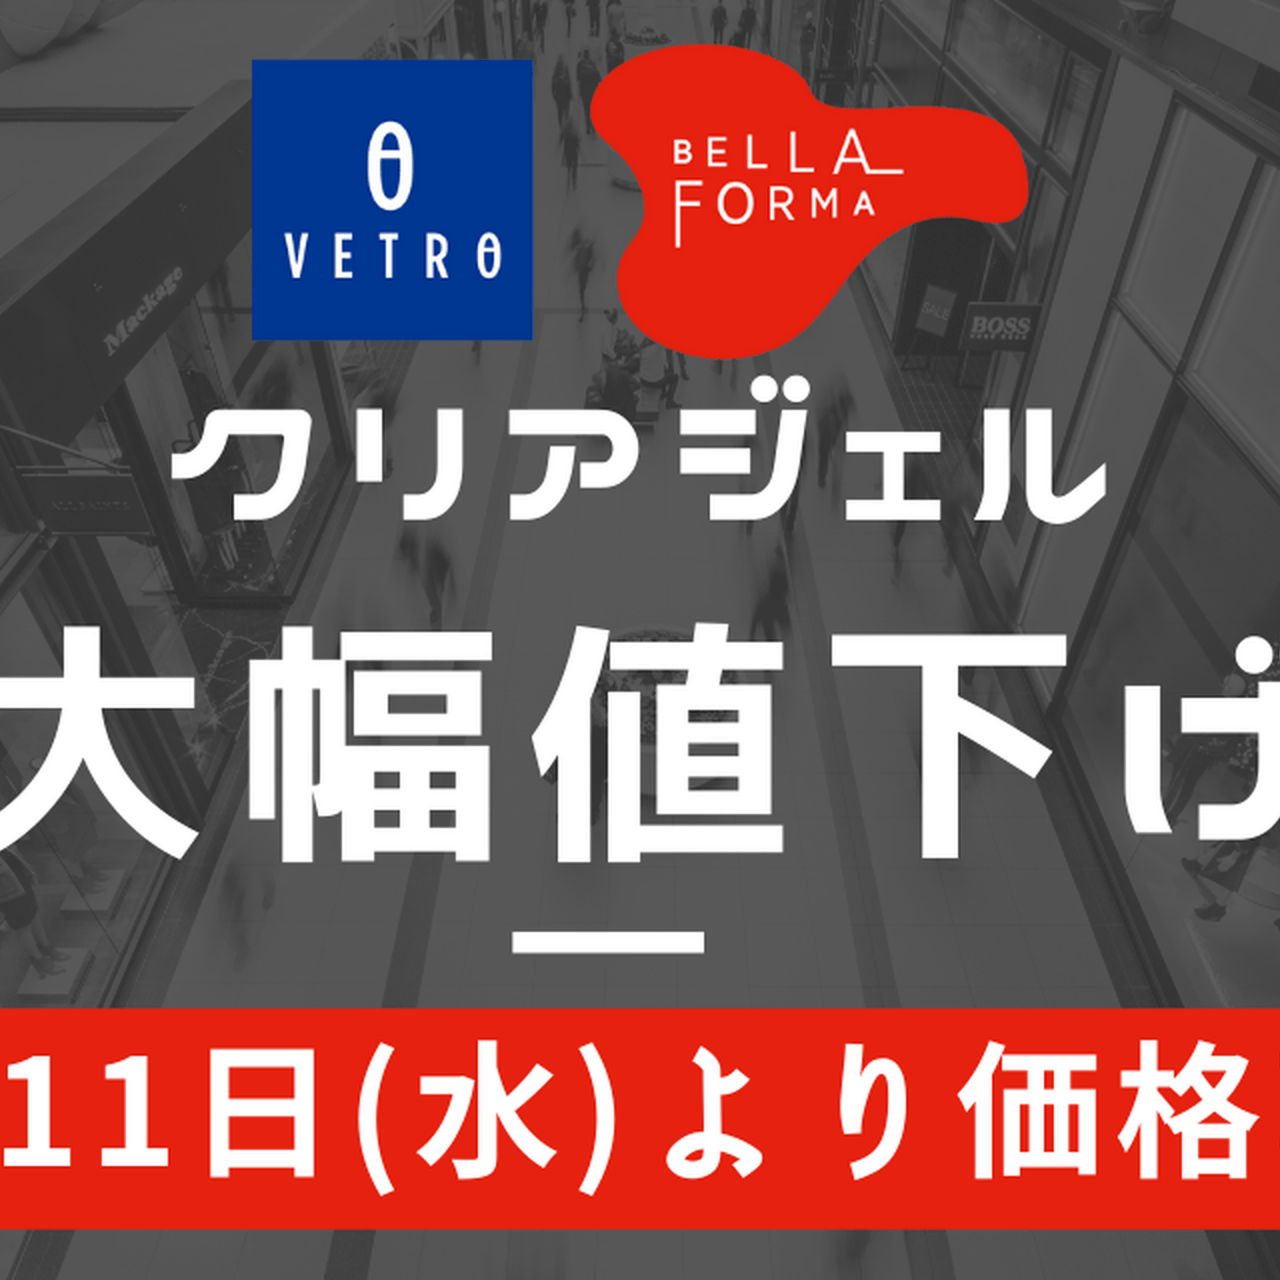 VETRO/BellaFormaのクリアジェル大幅値下げのお知らせ【10/11〜】